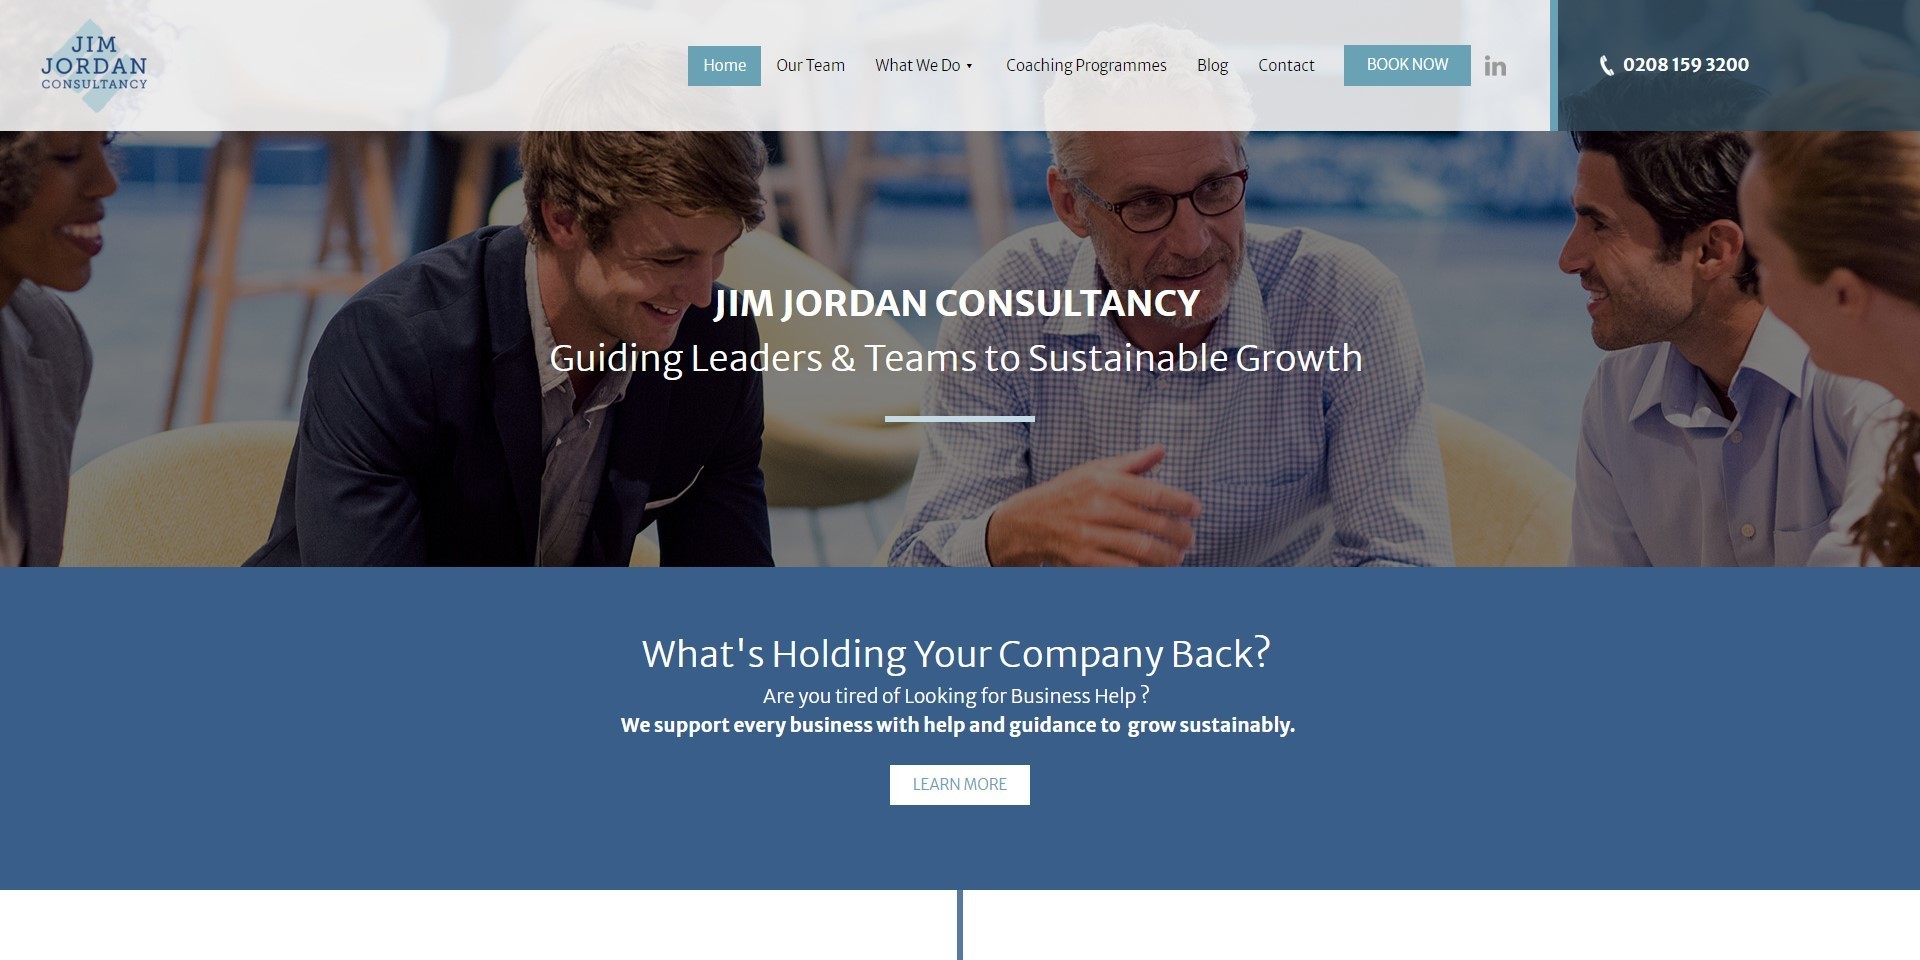 The new Jim Jordan Consultancy website, designed by it'seeze, shown on a desktop.